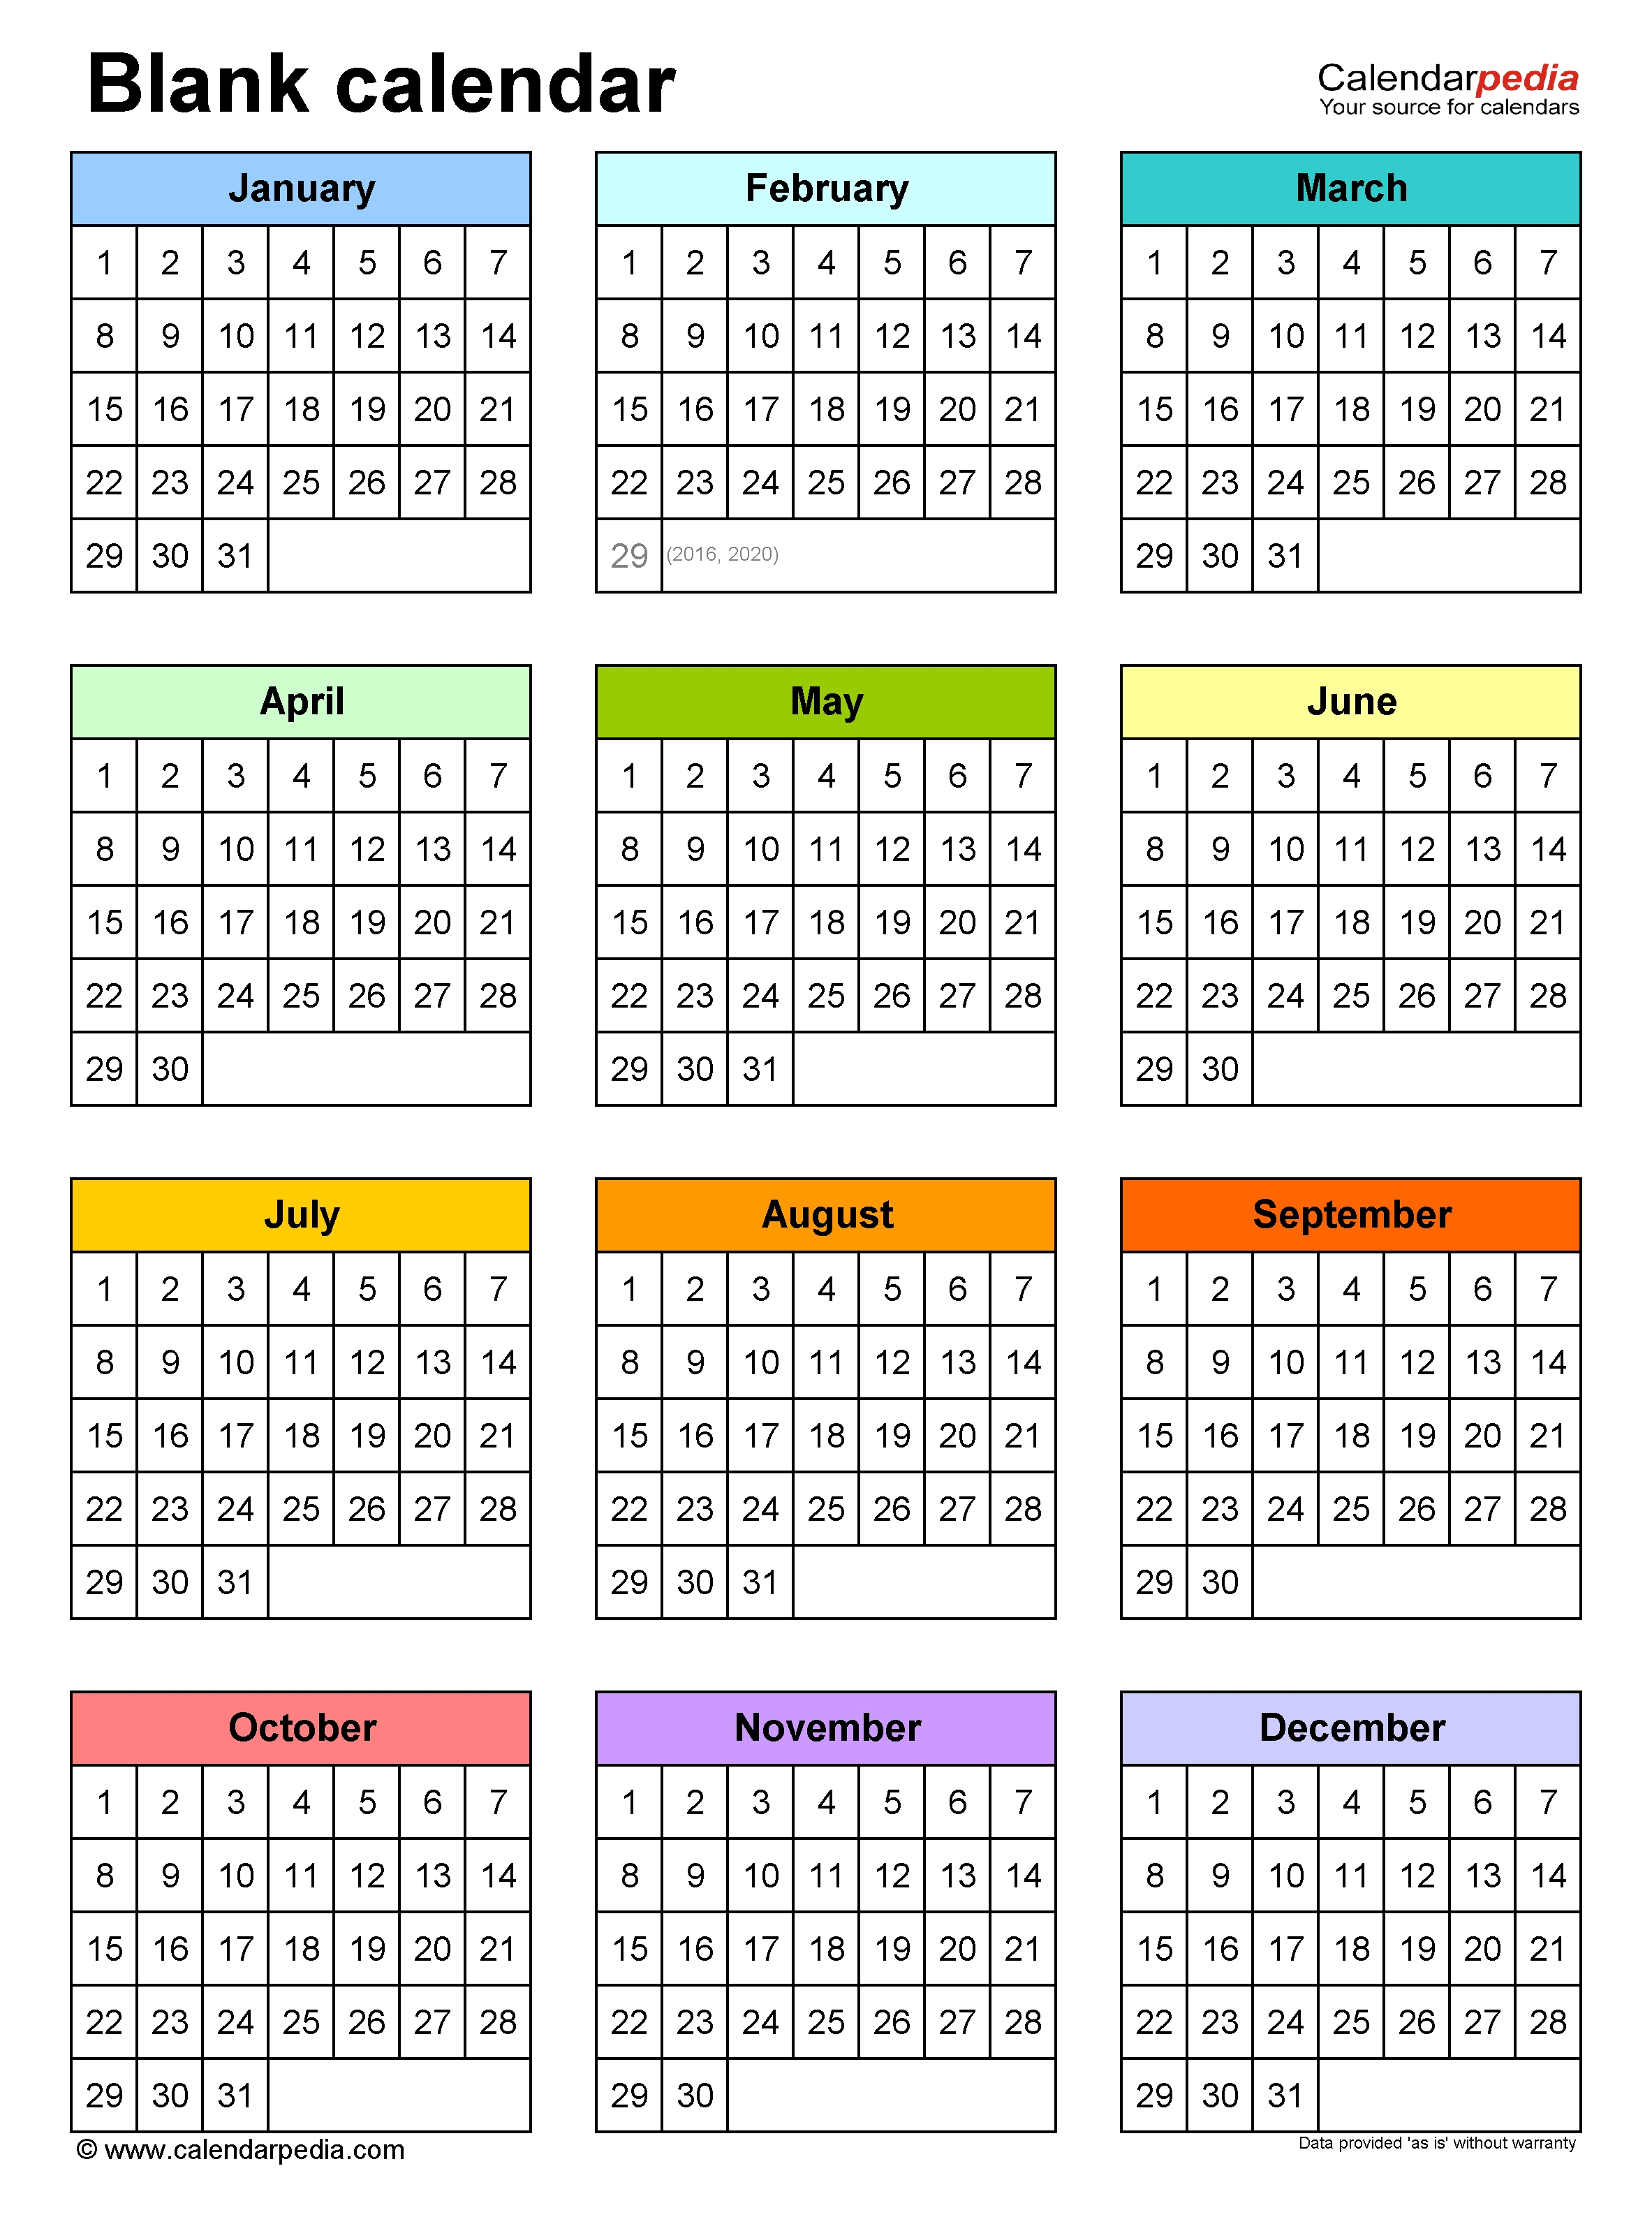 Blank Calendars - Free Printable Microsoft Word Templates 6 Year Calendar Template